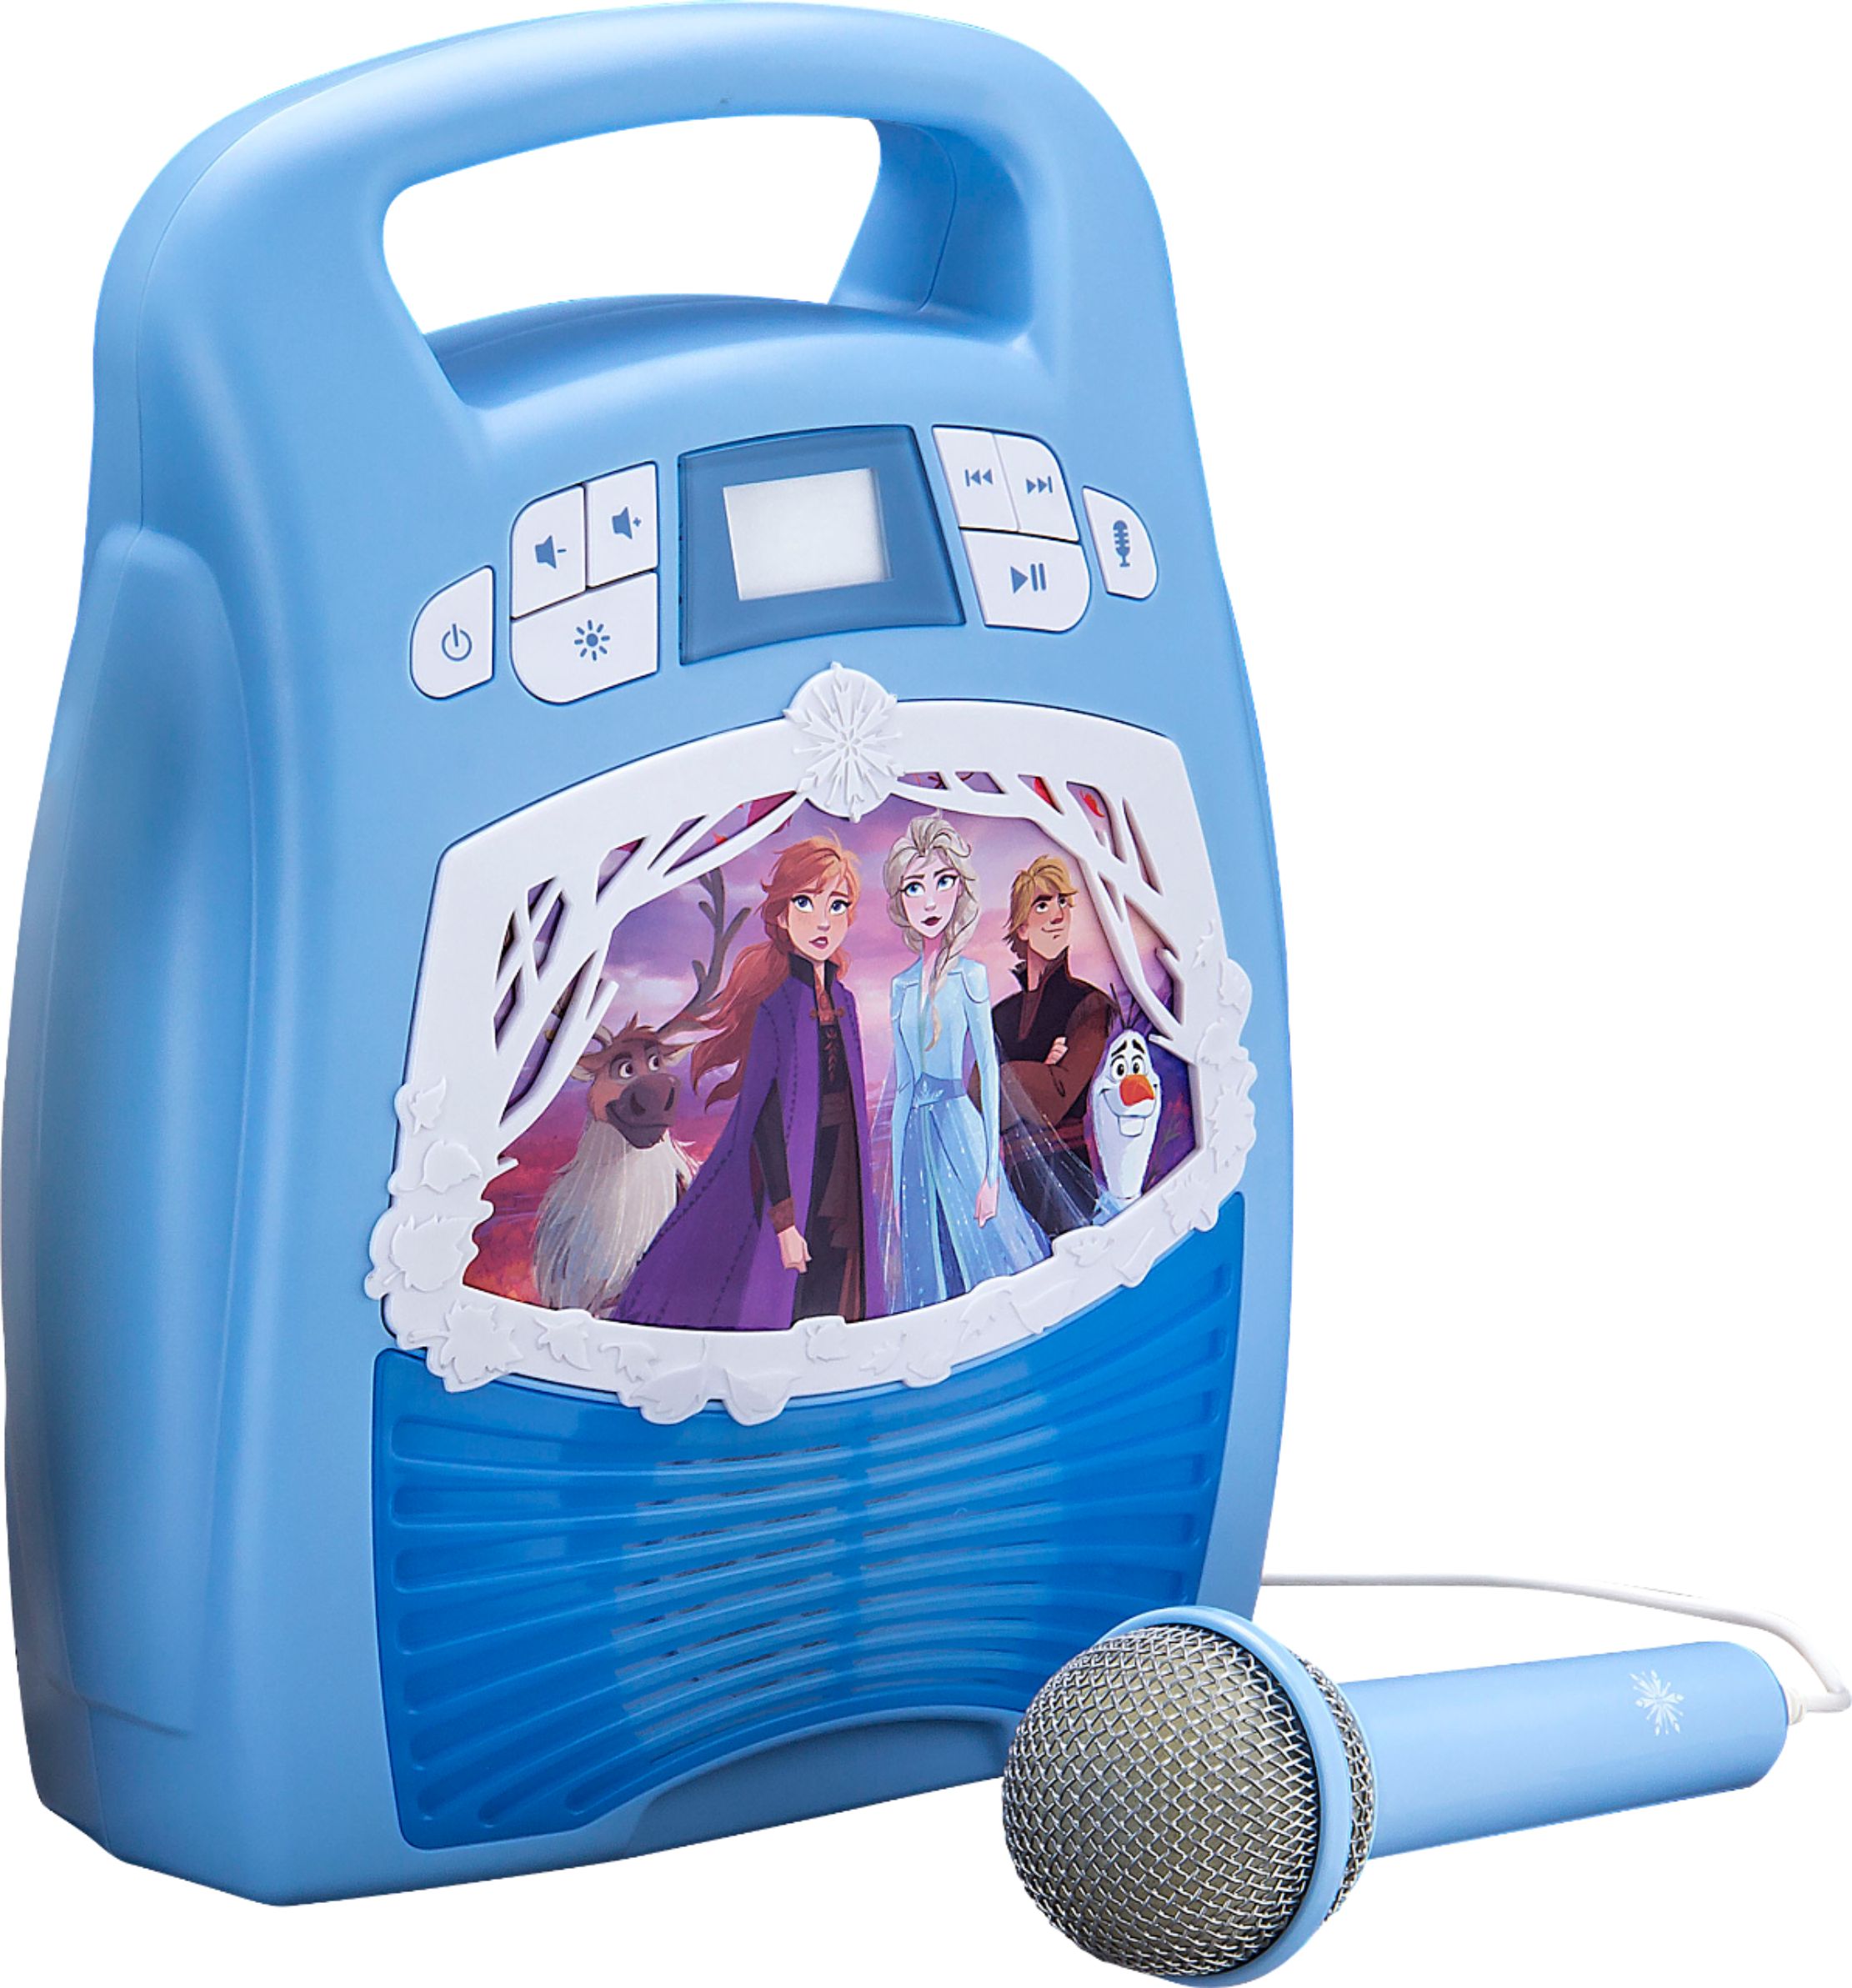 Angle View: eKids - Frozen II Sing-Along Boombox Karaoke System - Light Blue/White